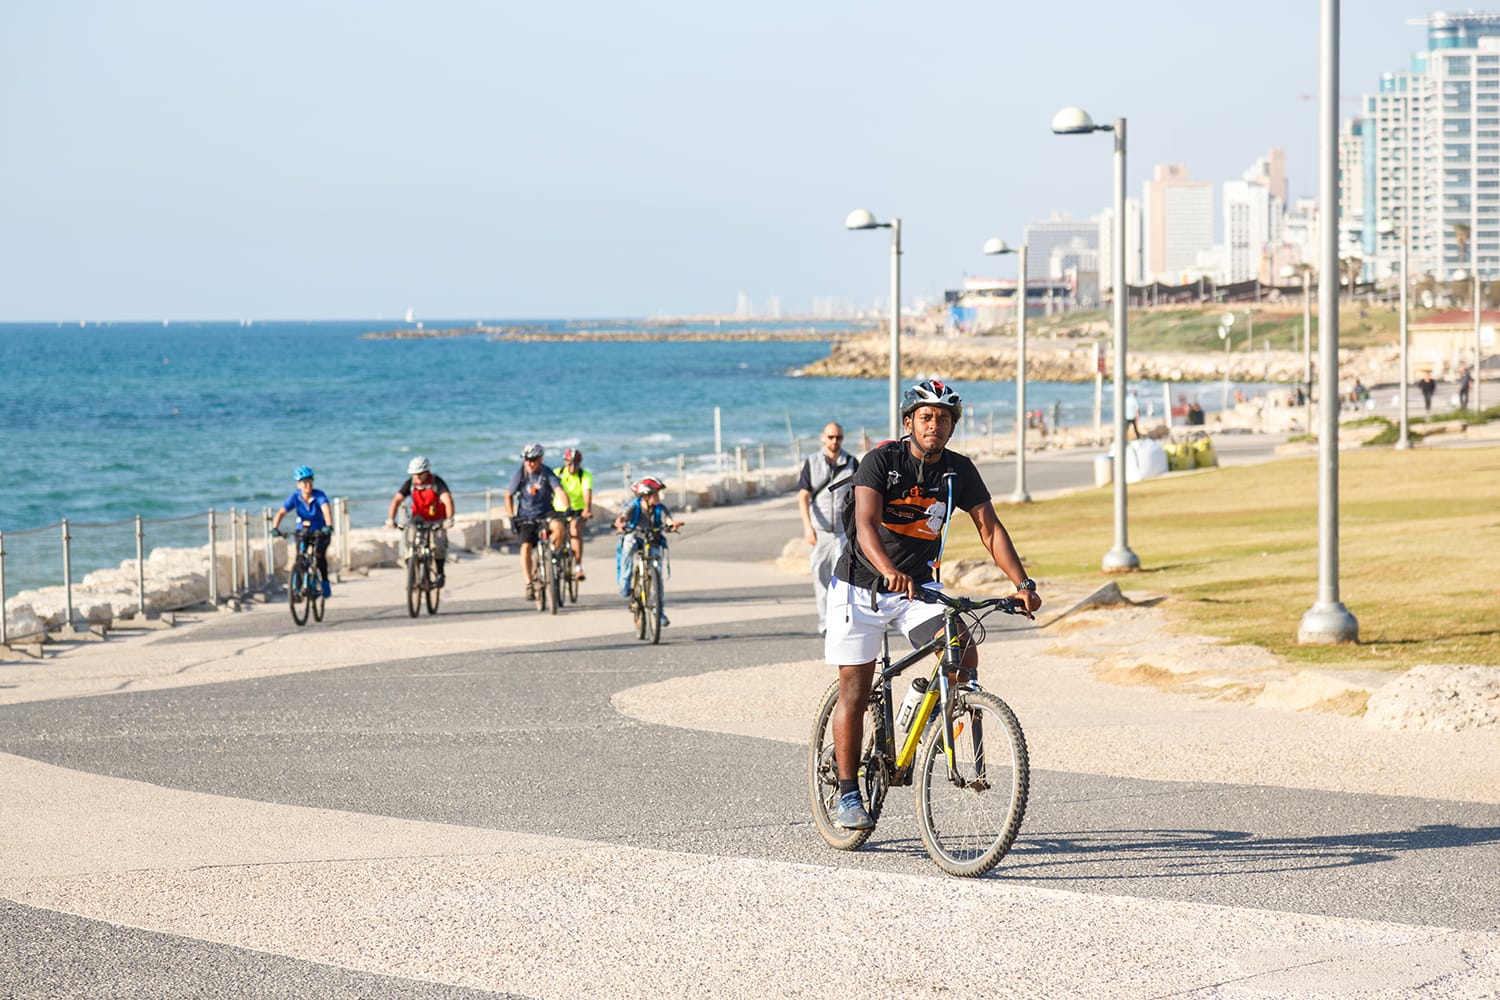 People riding bicycles at the seaside promenade in Tel Aviv, Israel